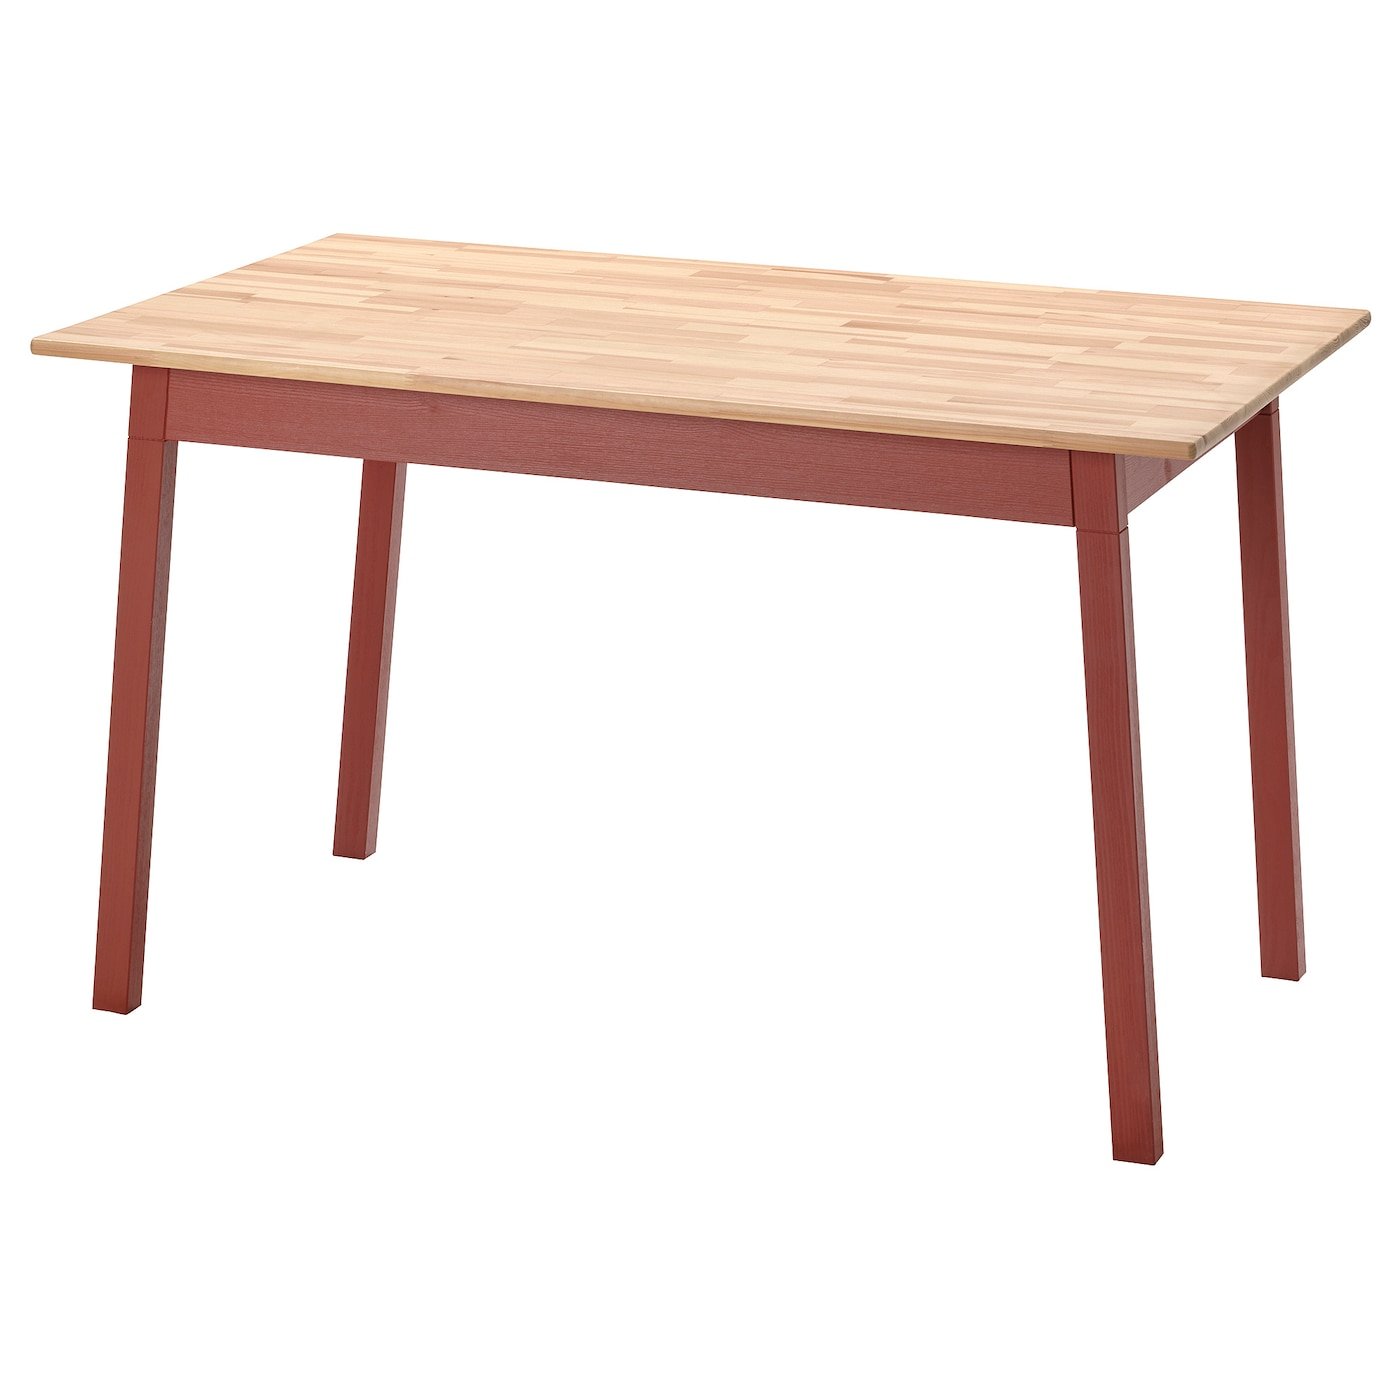 PINNTORP Tisch - hellbraun lasiert/rot las. 125x75 cm